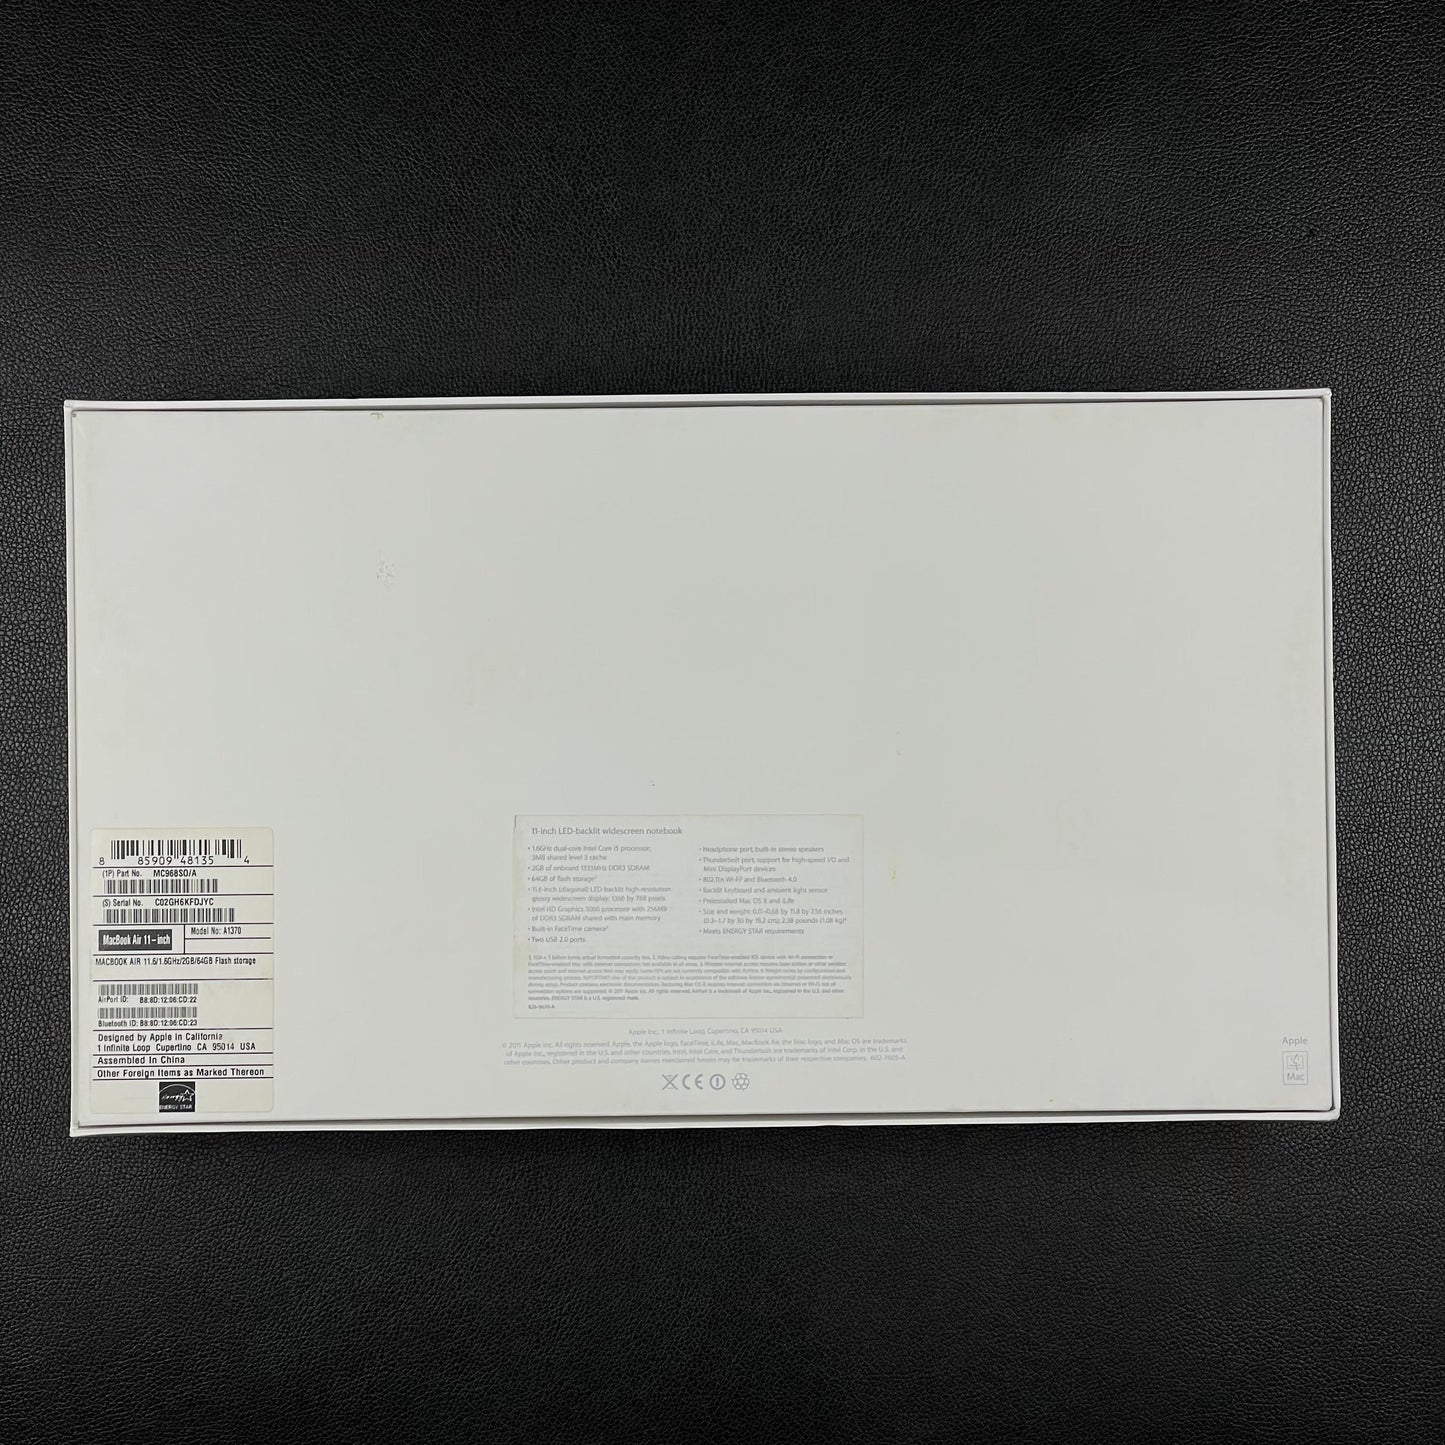 MacBook Air (11-inch, mid 2011)